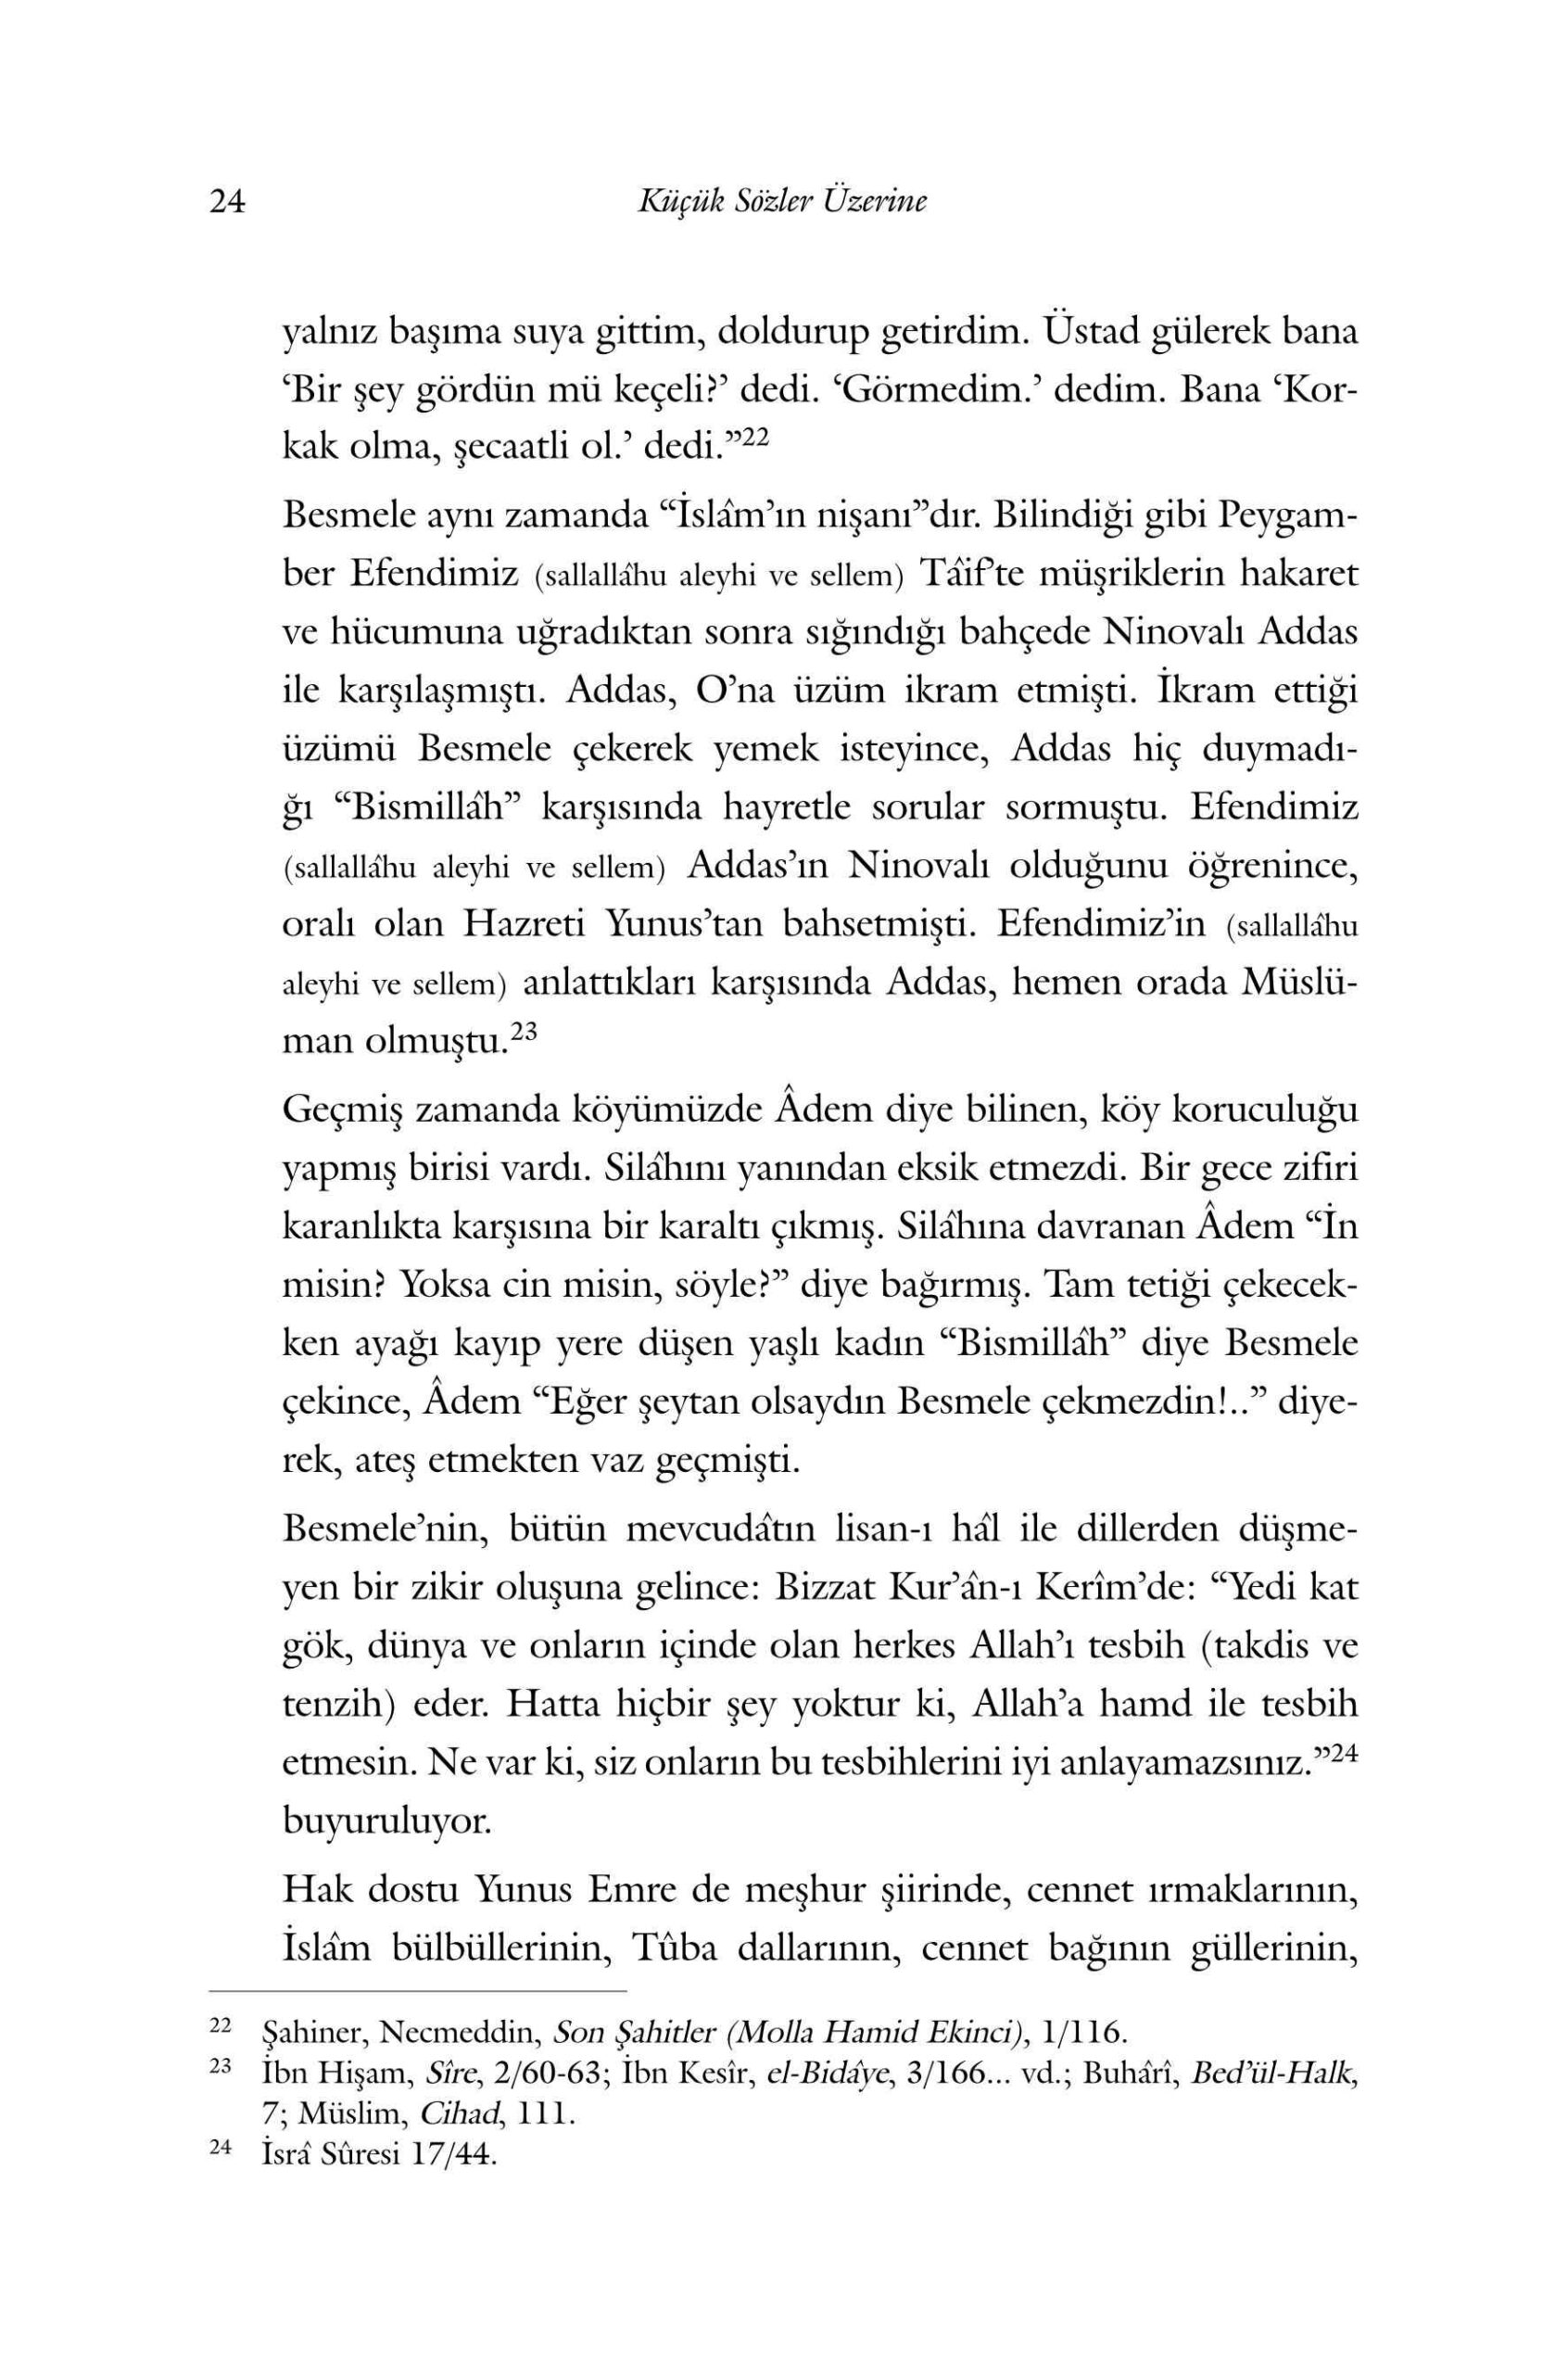 B Said Nursi - Abdullah Aymaz - Kucuk Sozler Uzerine - SahdamarY.pdf, 193-Sayfa 